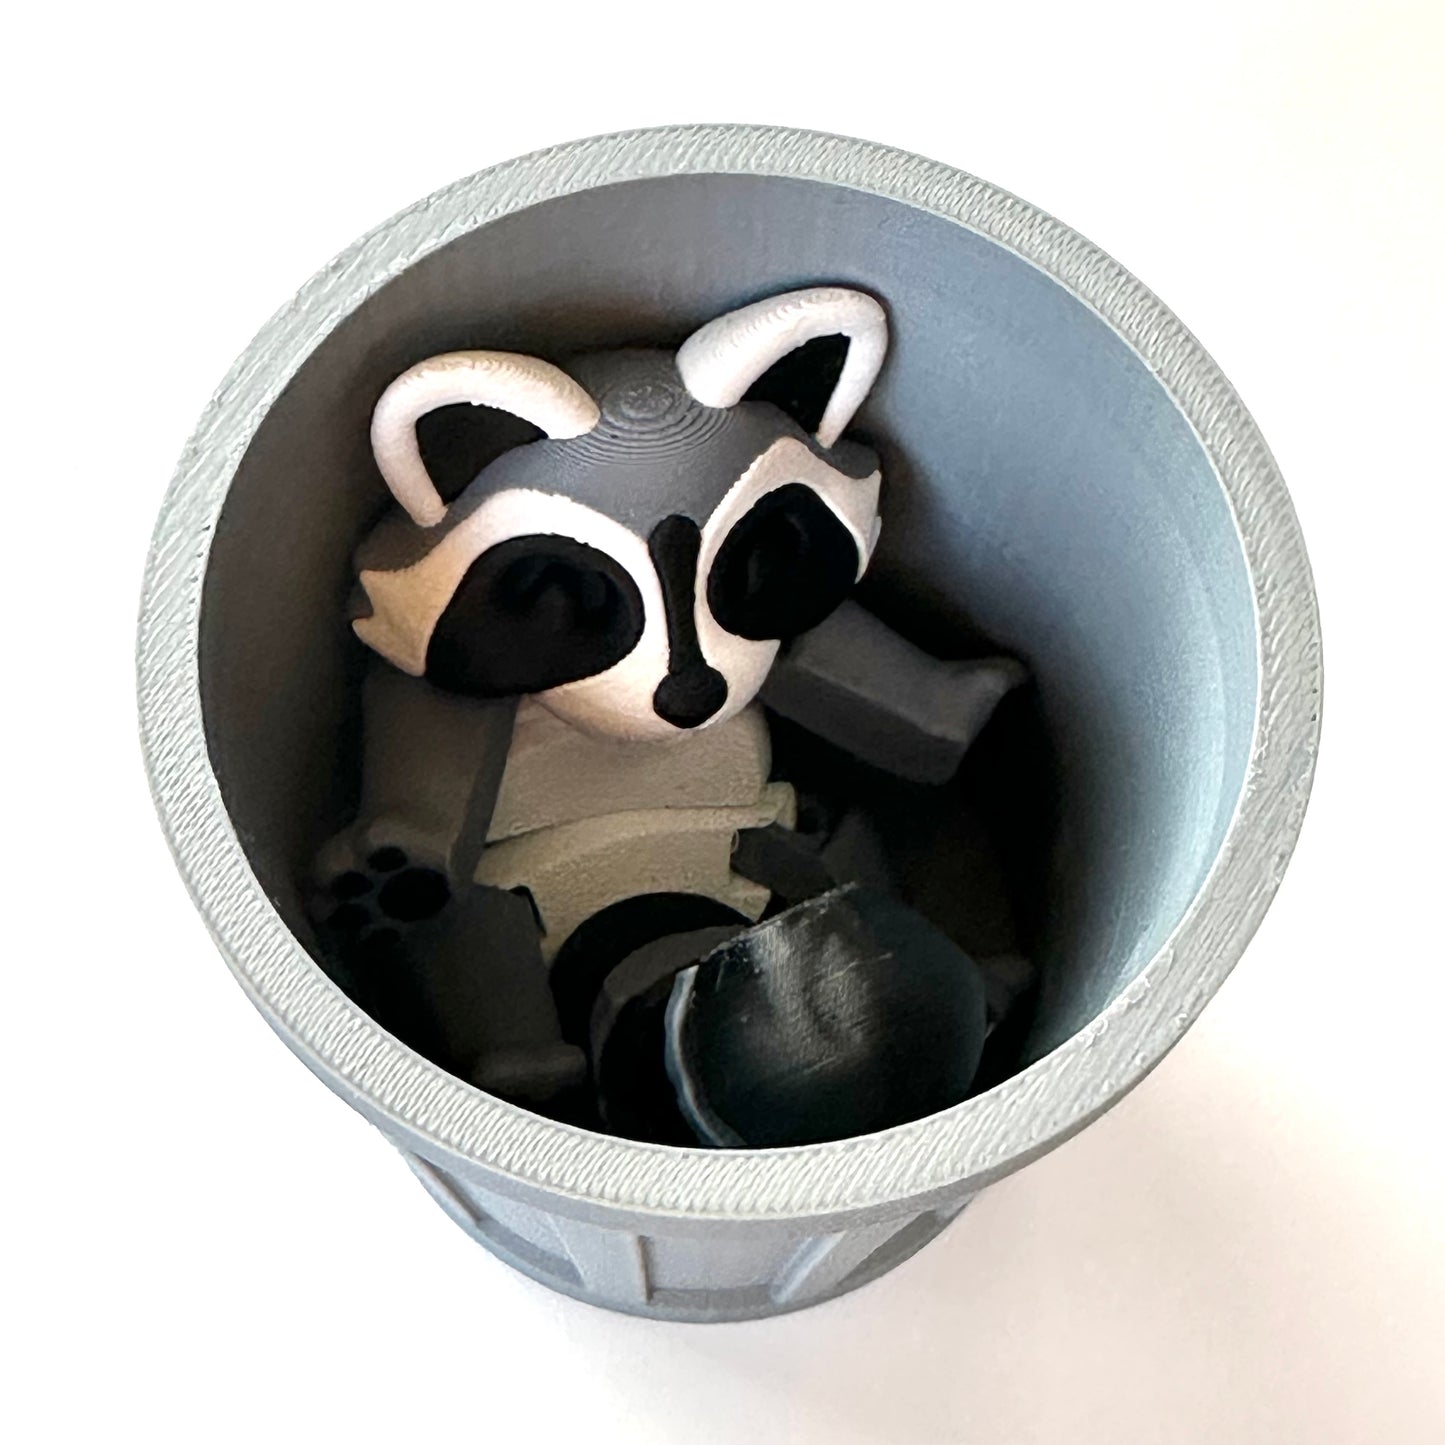 Trash Panda aka Raccoon - 3D Printed Articulating Figure